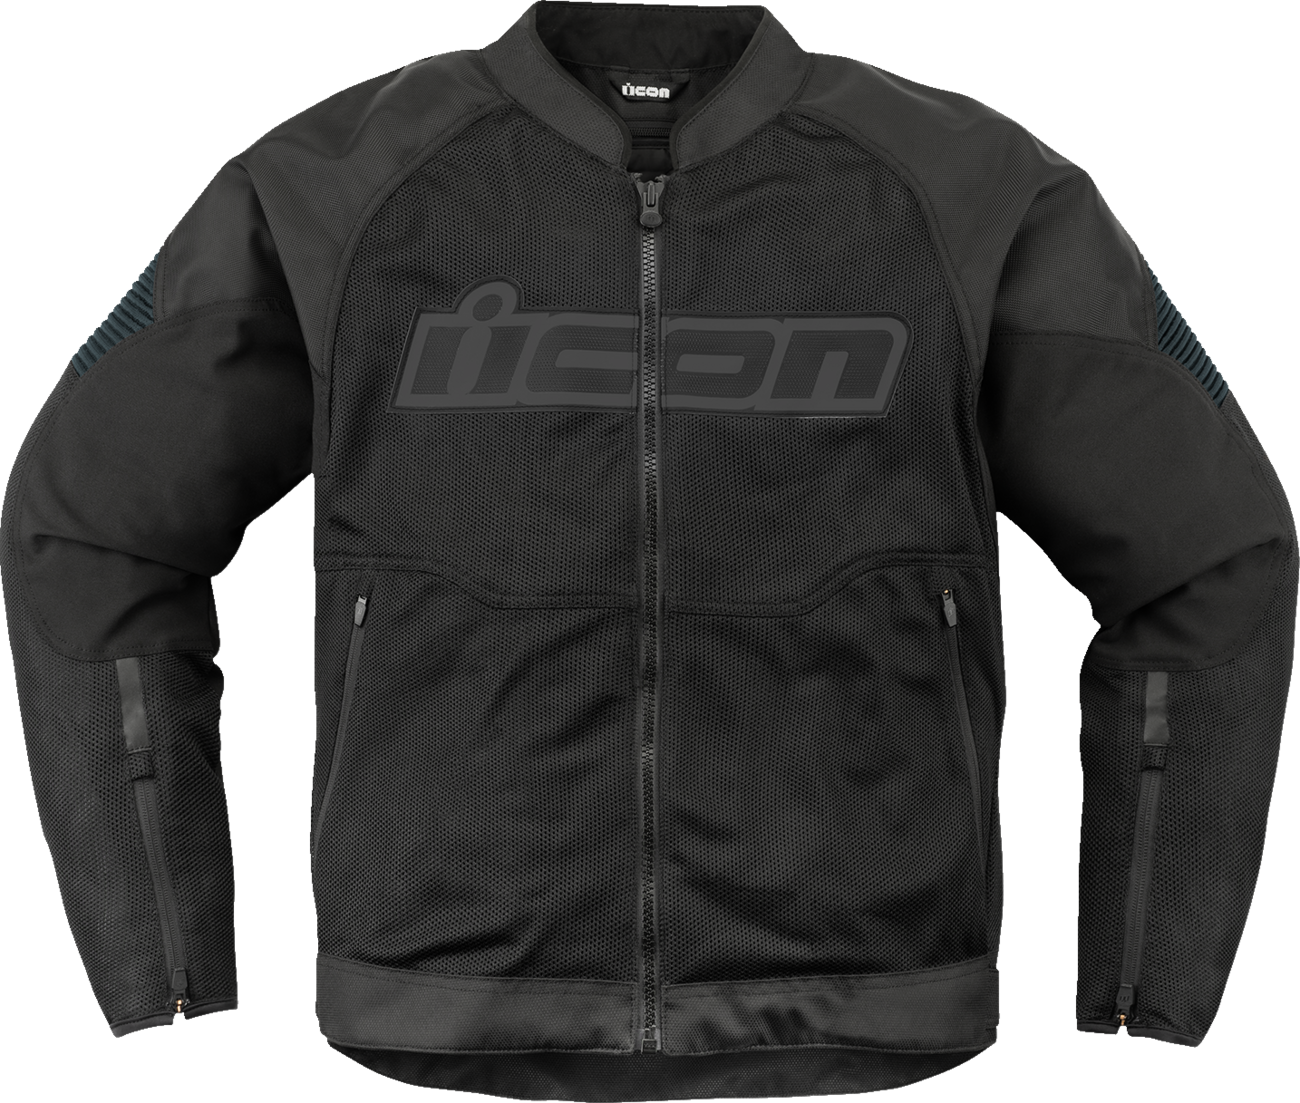 ICON Overlord3 Mesh™ CE Jacket - Black - Large 2820-6732